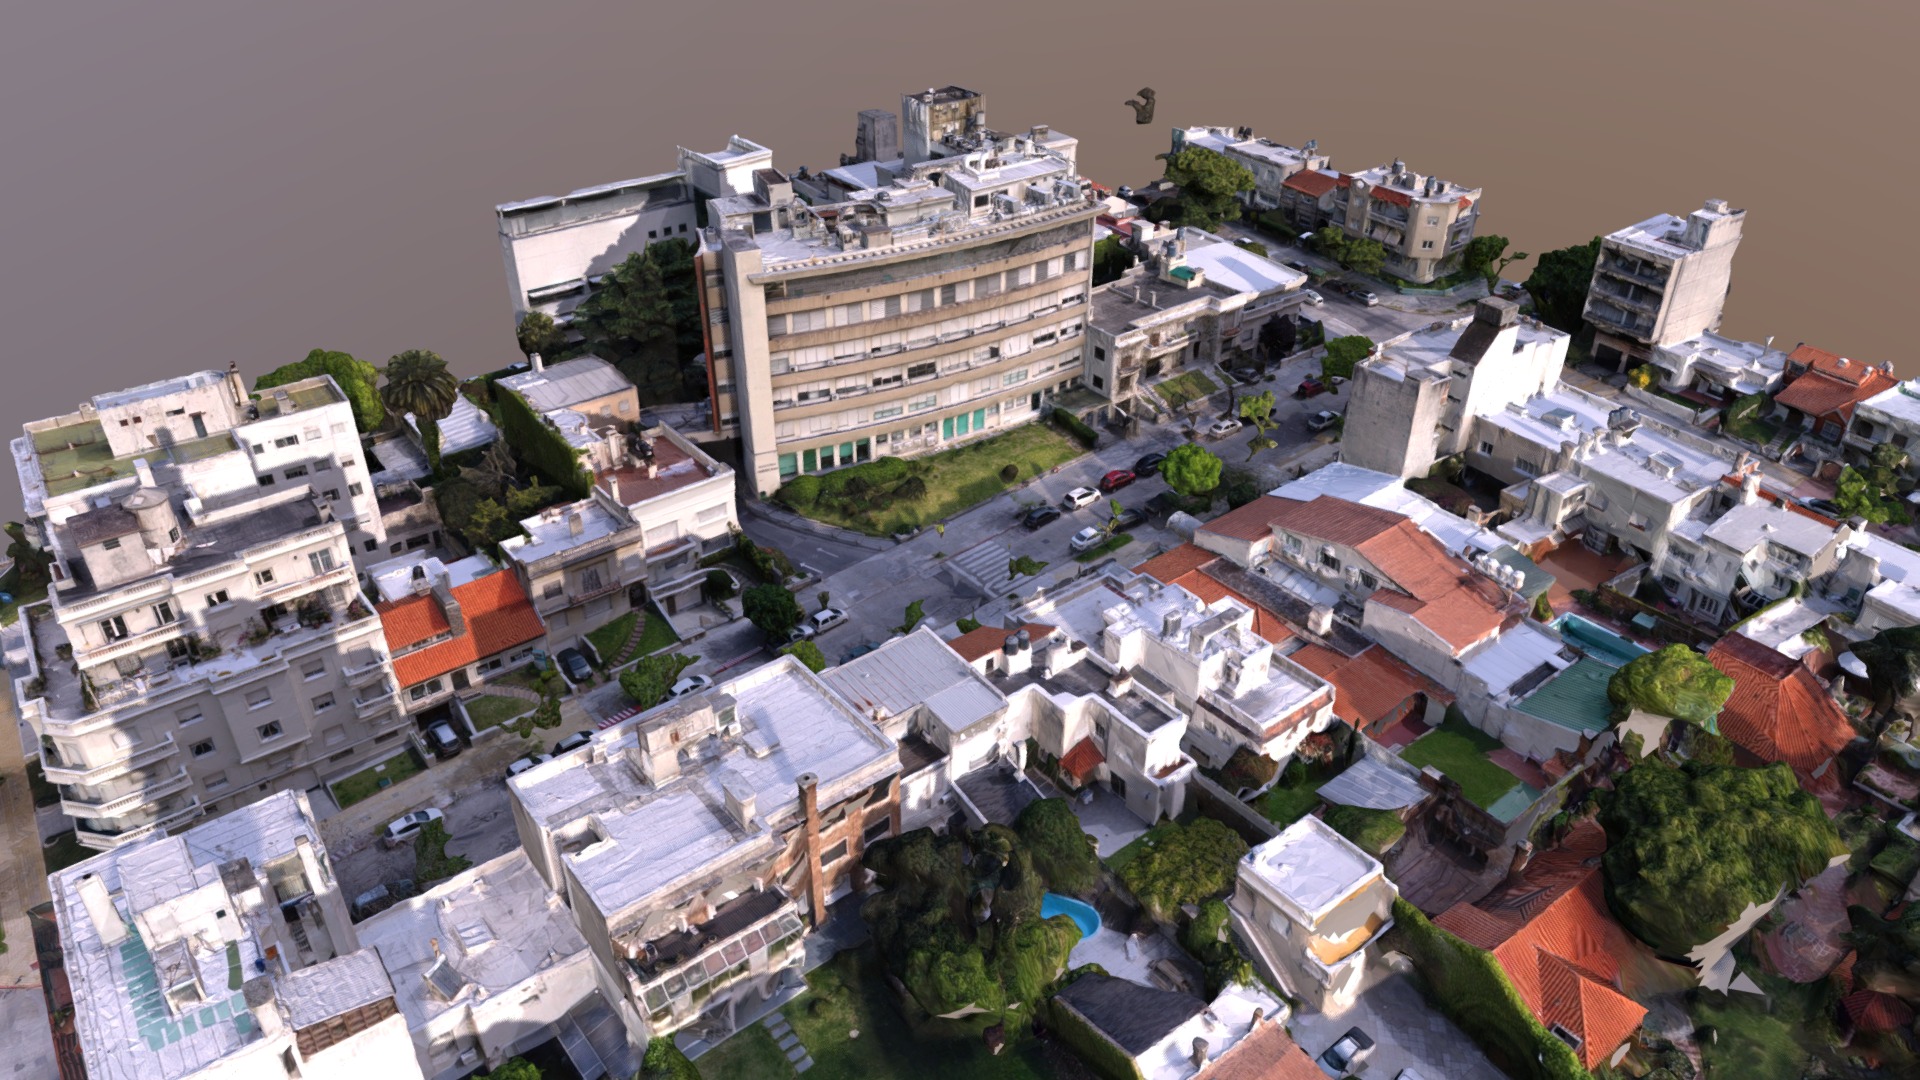 3D model Sanatorio Americano Photogrammetry, by drone - This is a 3D model of the Sanatorio Americano Photogrammetry, by drone. The 3D model is about a city with many buildings.